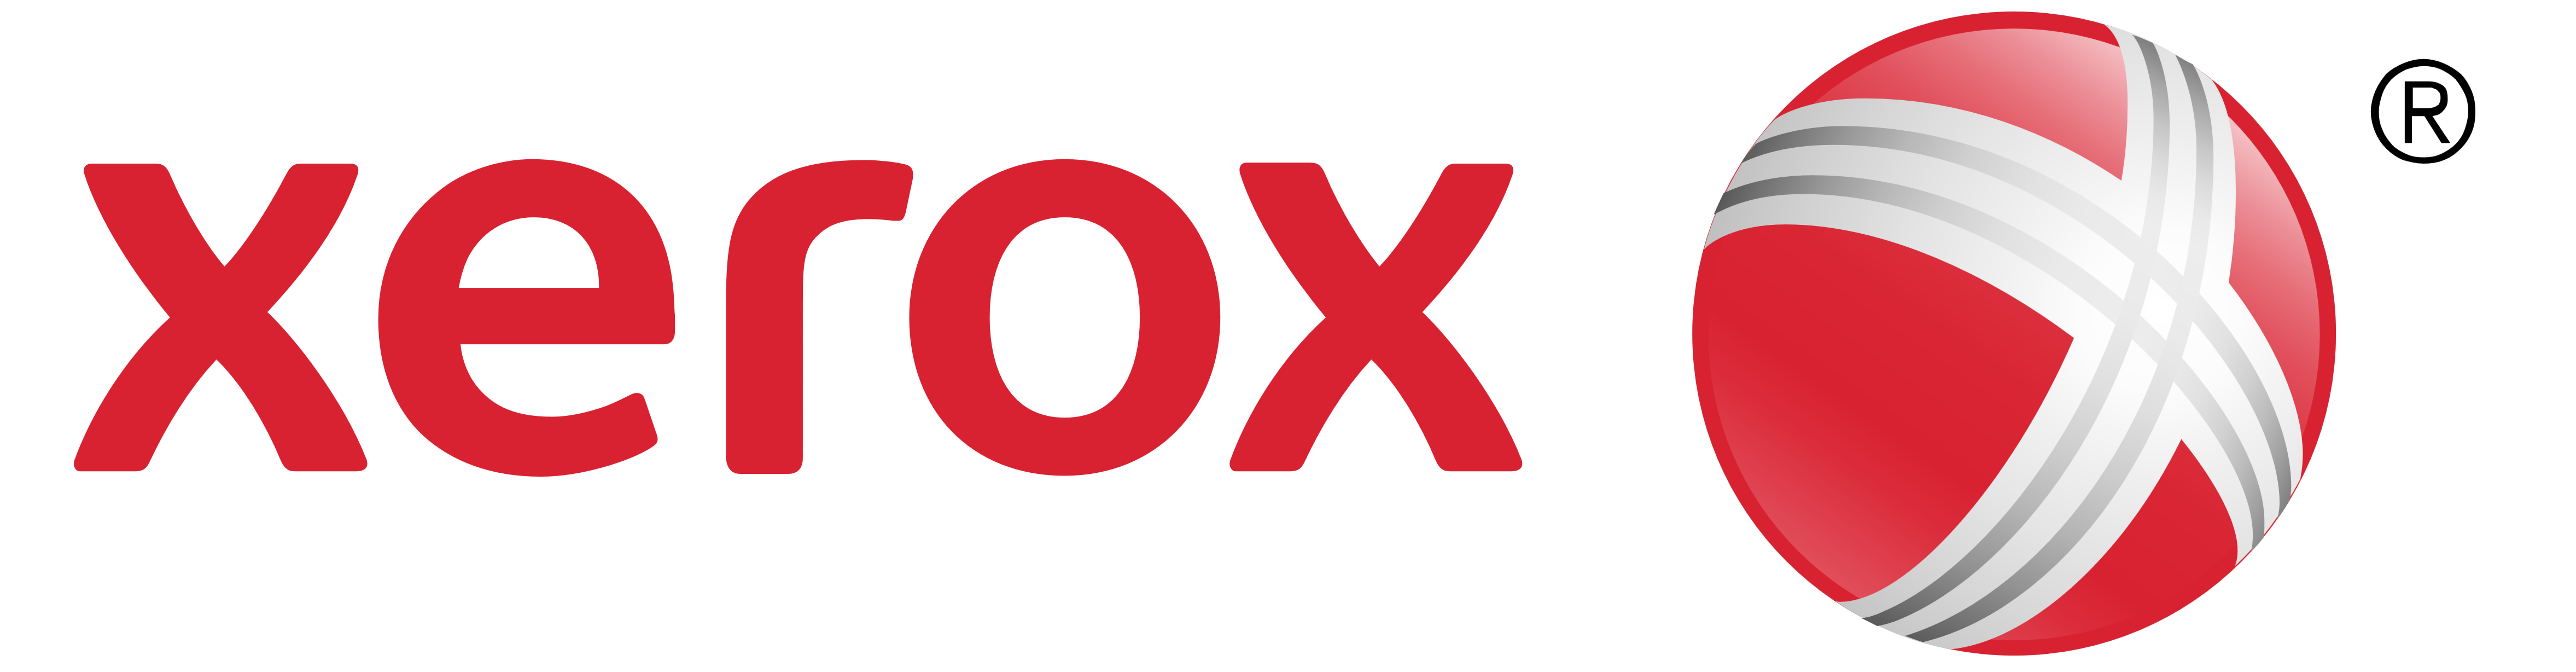 Xerox Channel Partner Program Adds More Dealers | Industry Analysts, Inc.